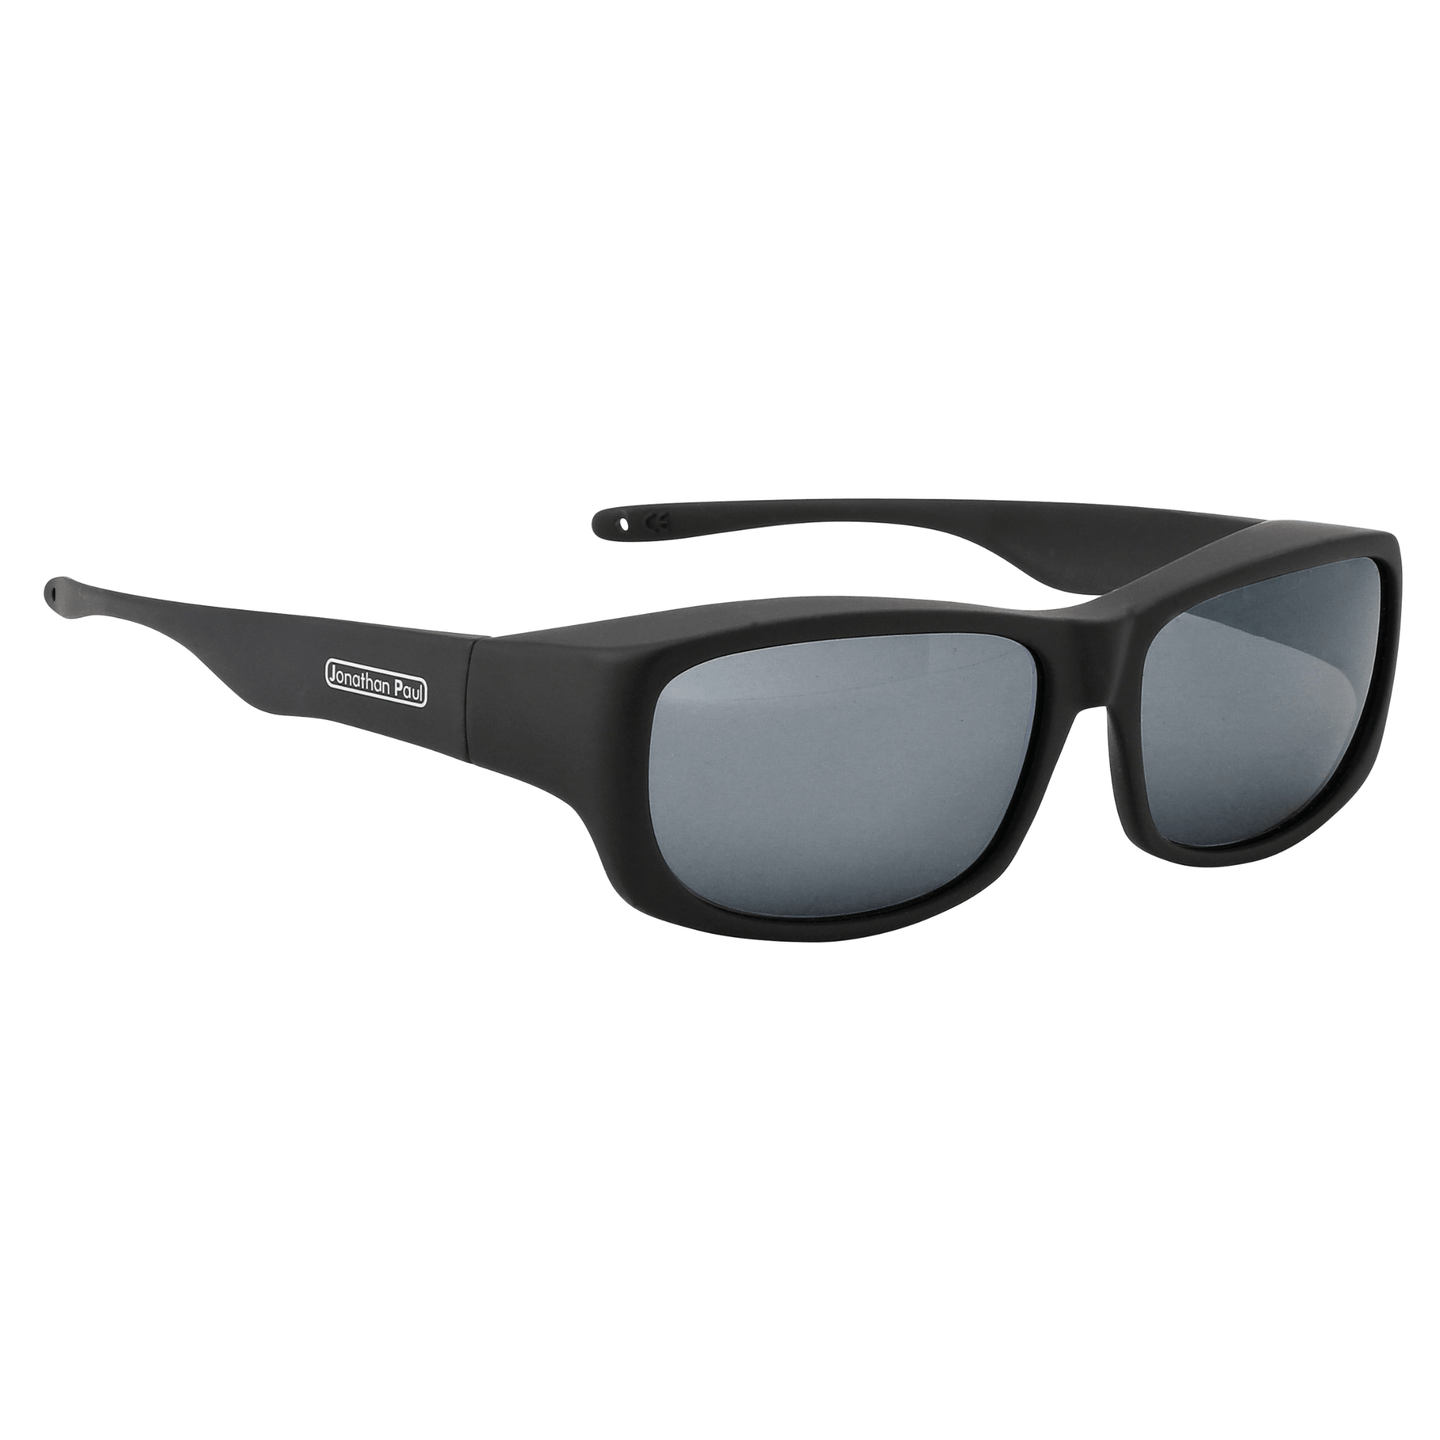 Fitover Sunglasses 'Pandera' Matte Black - Grey Lens